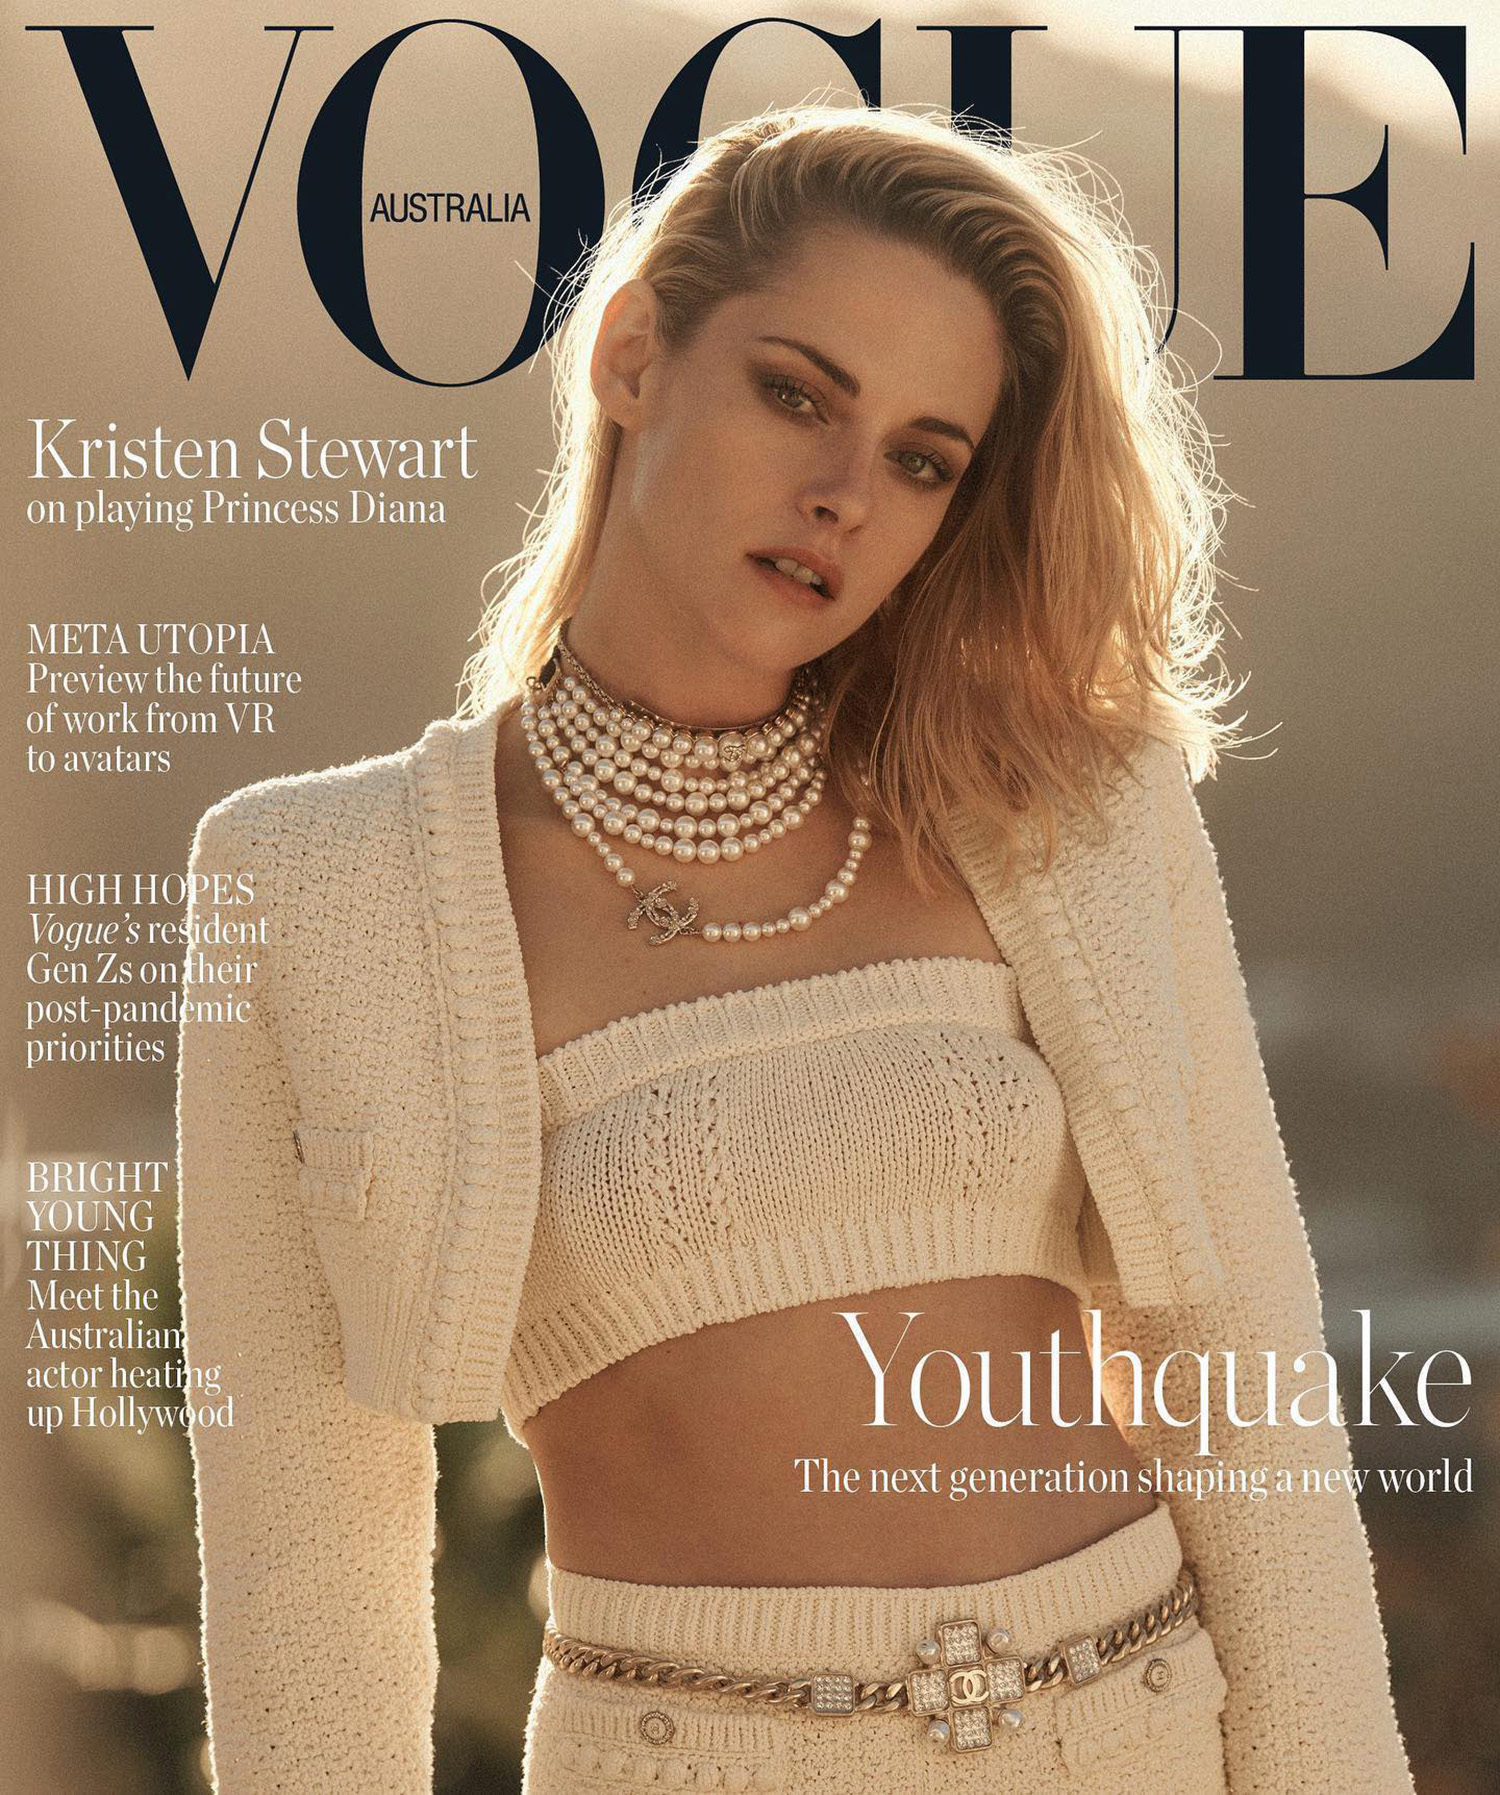 Kristen Stewart in Chanel on Vogue Australia February 2022 cover